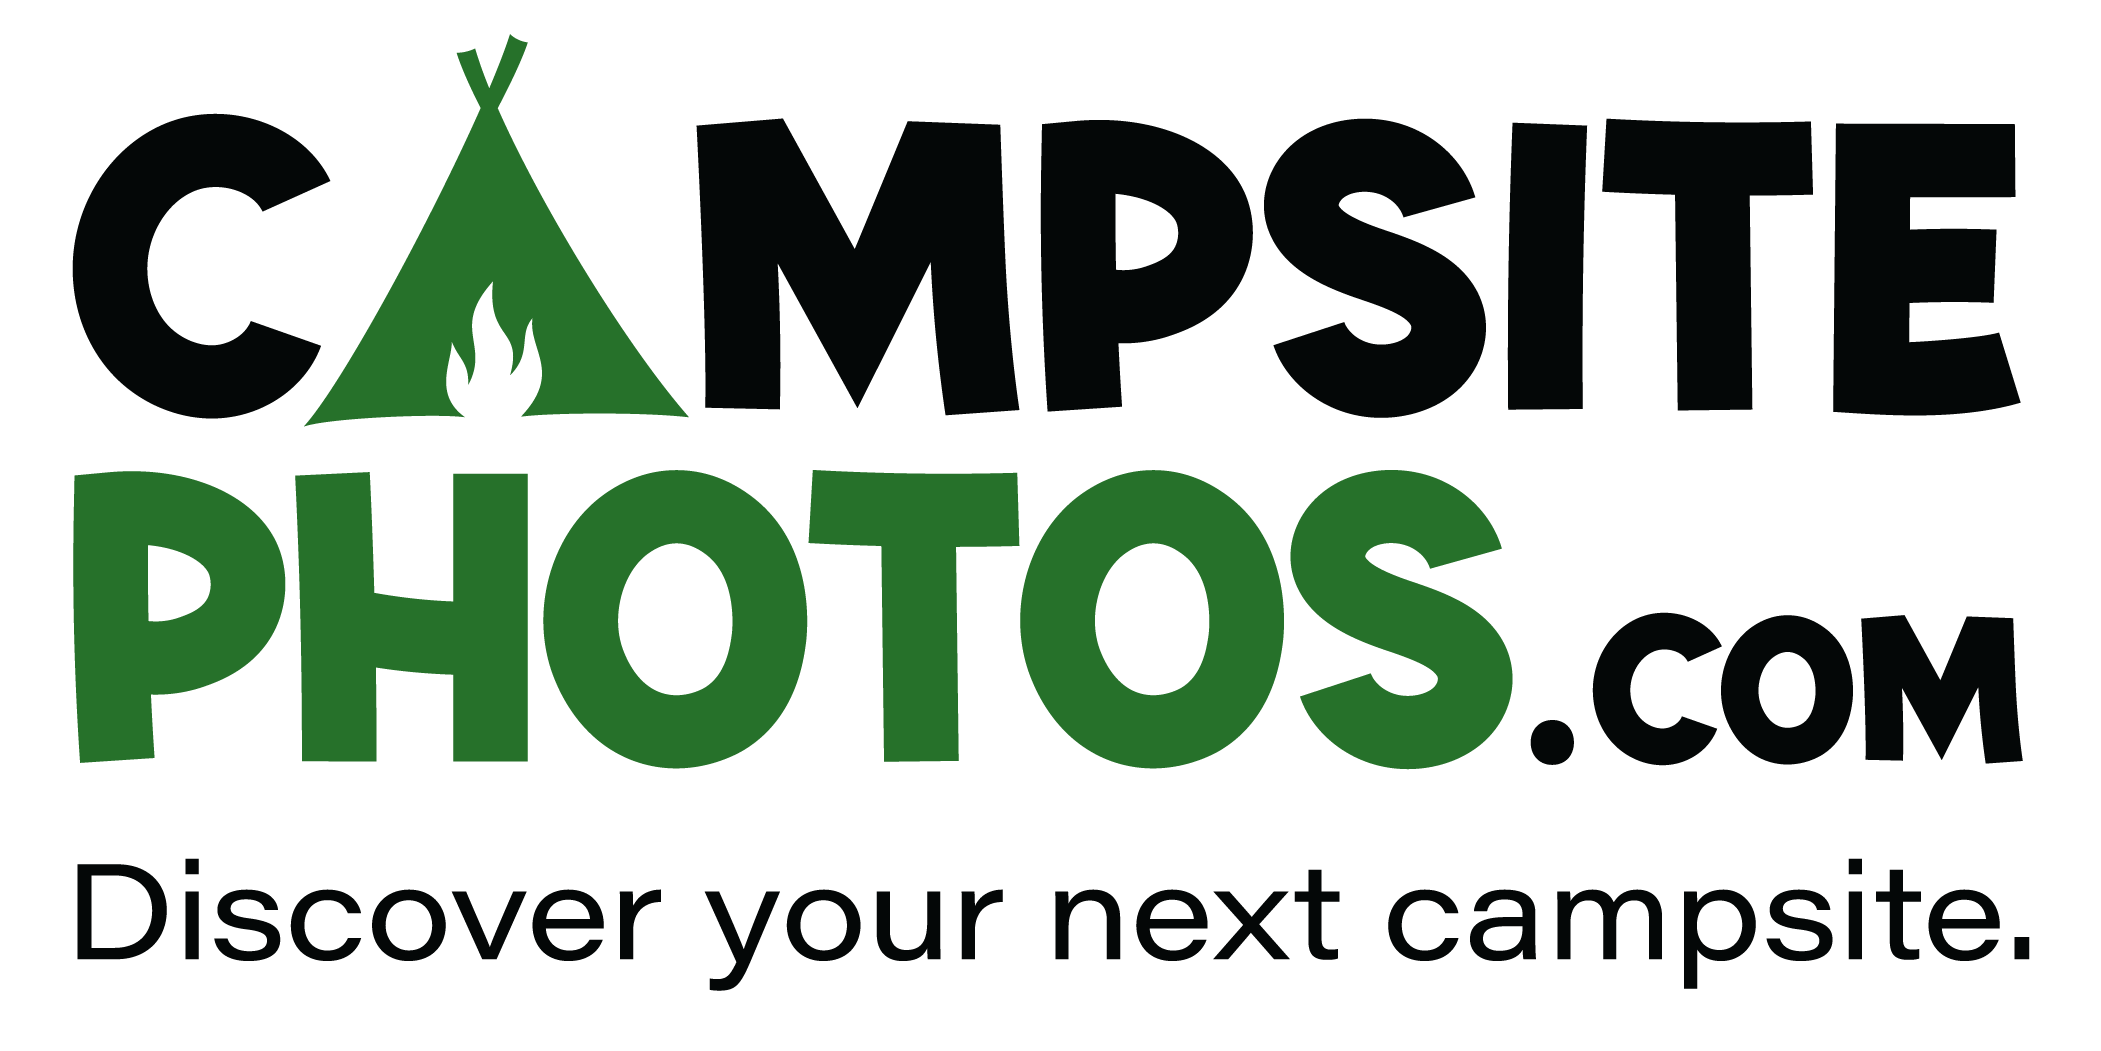 CampsitePhotos Logo